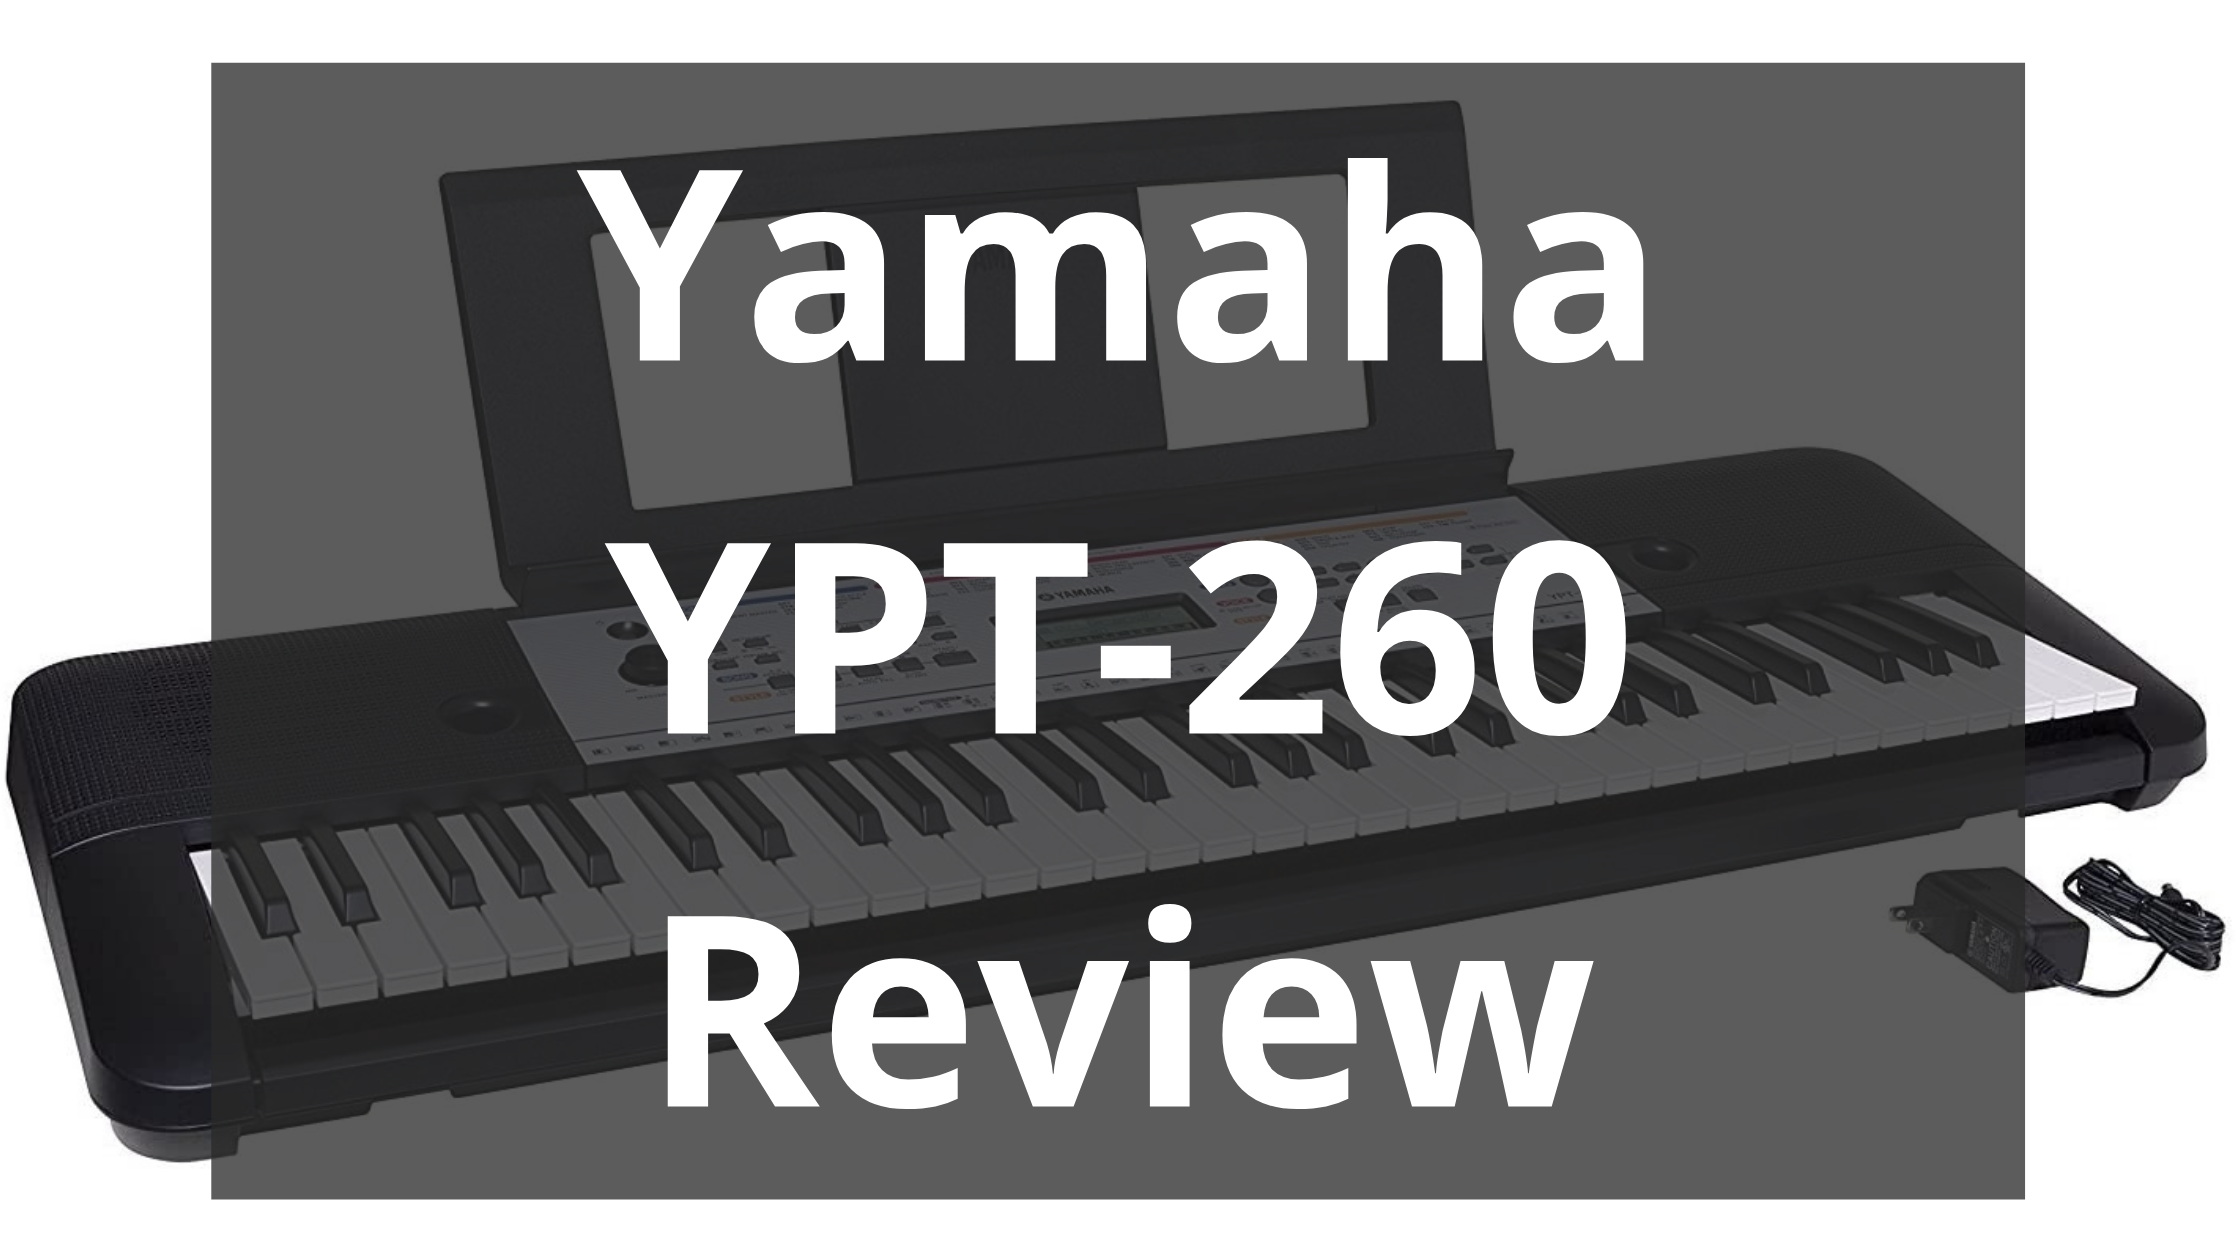 Yamaha Ypt 260 Review